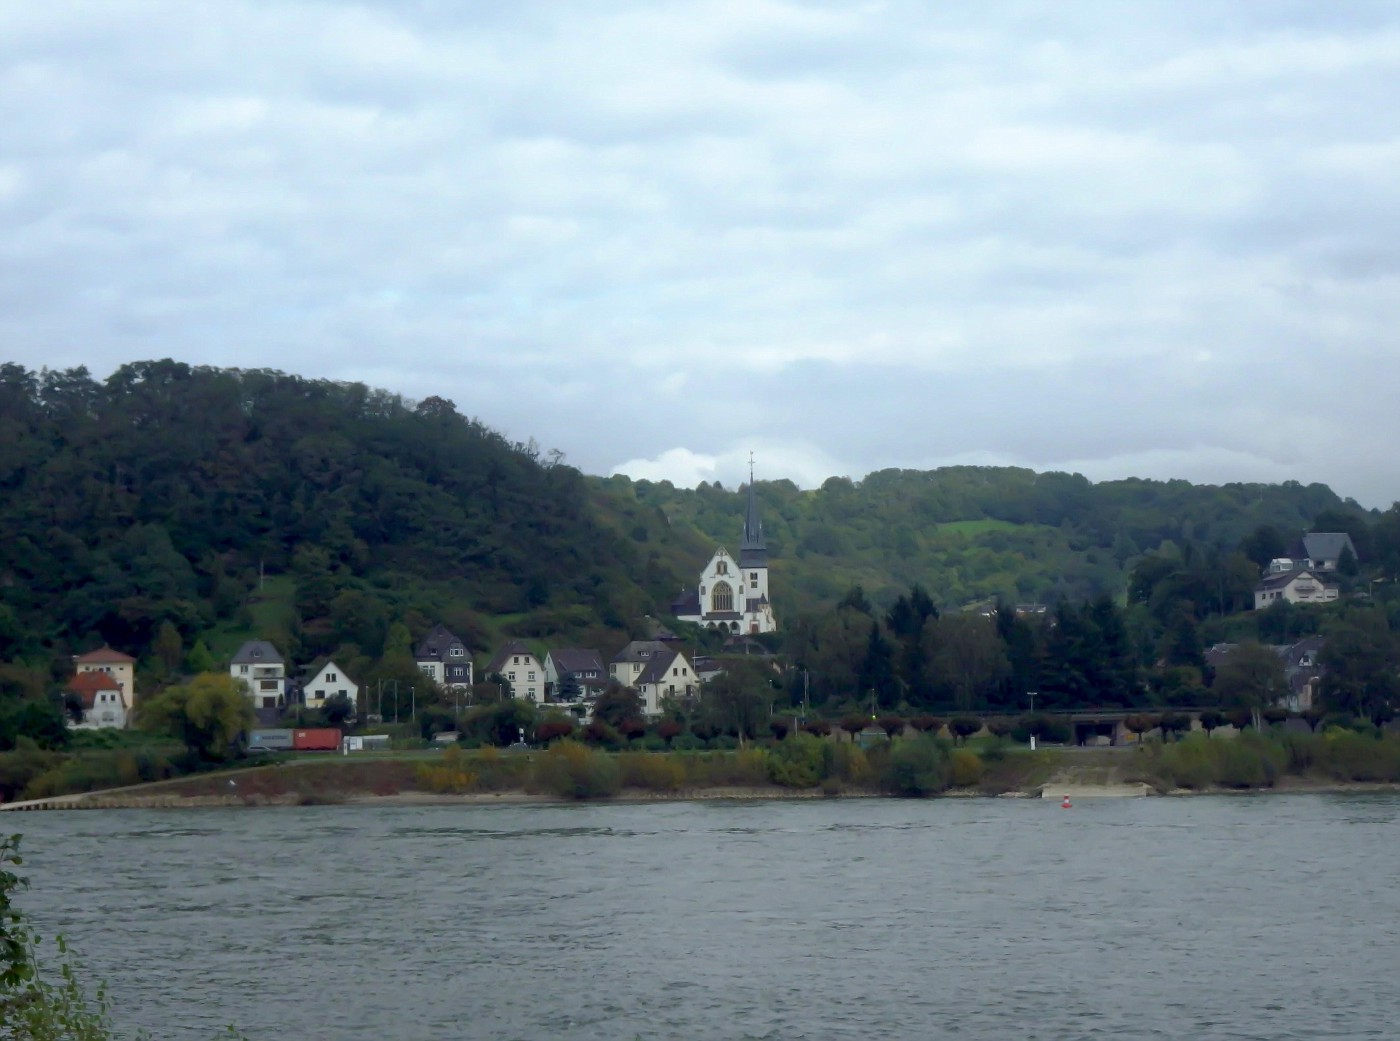 At the Rhine